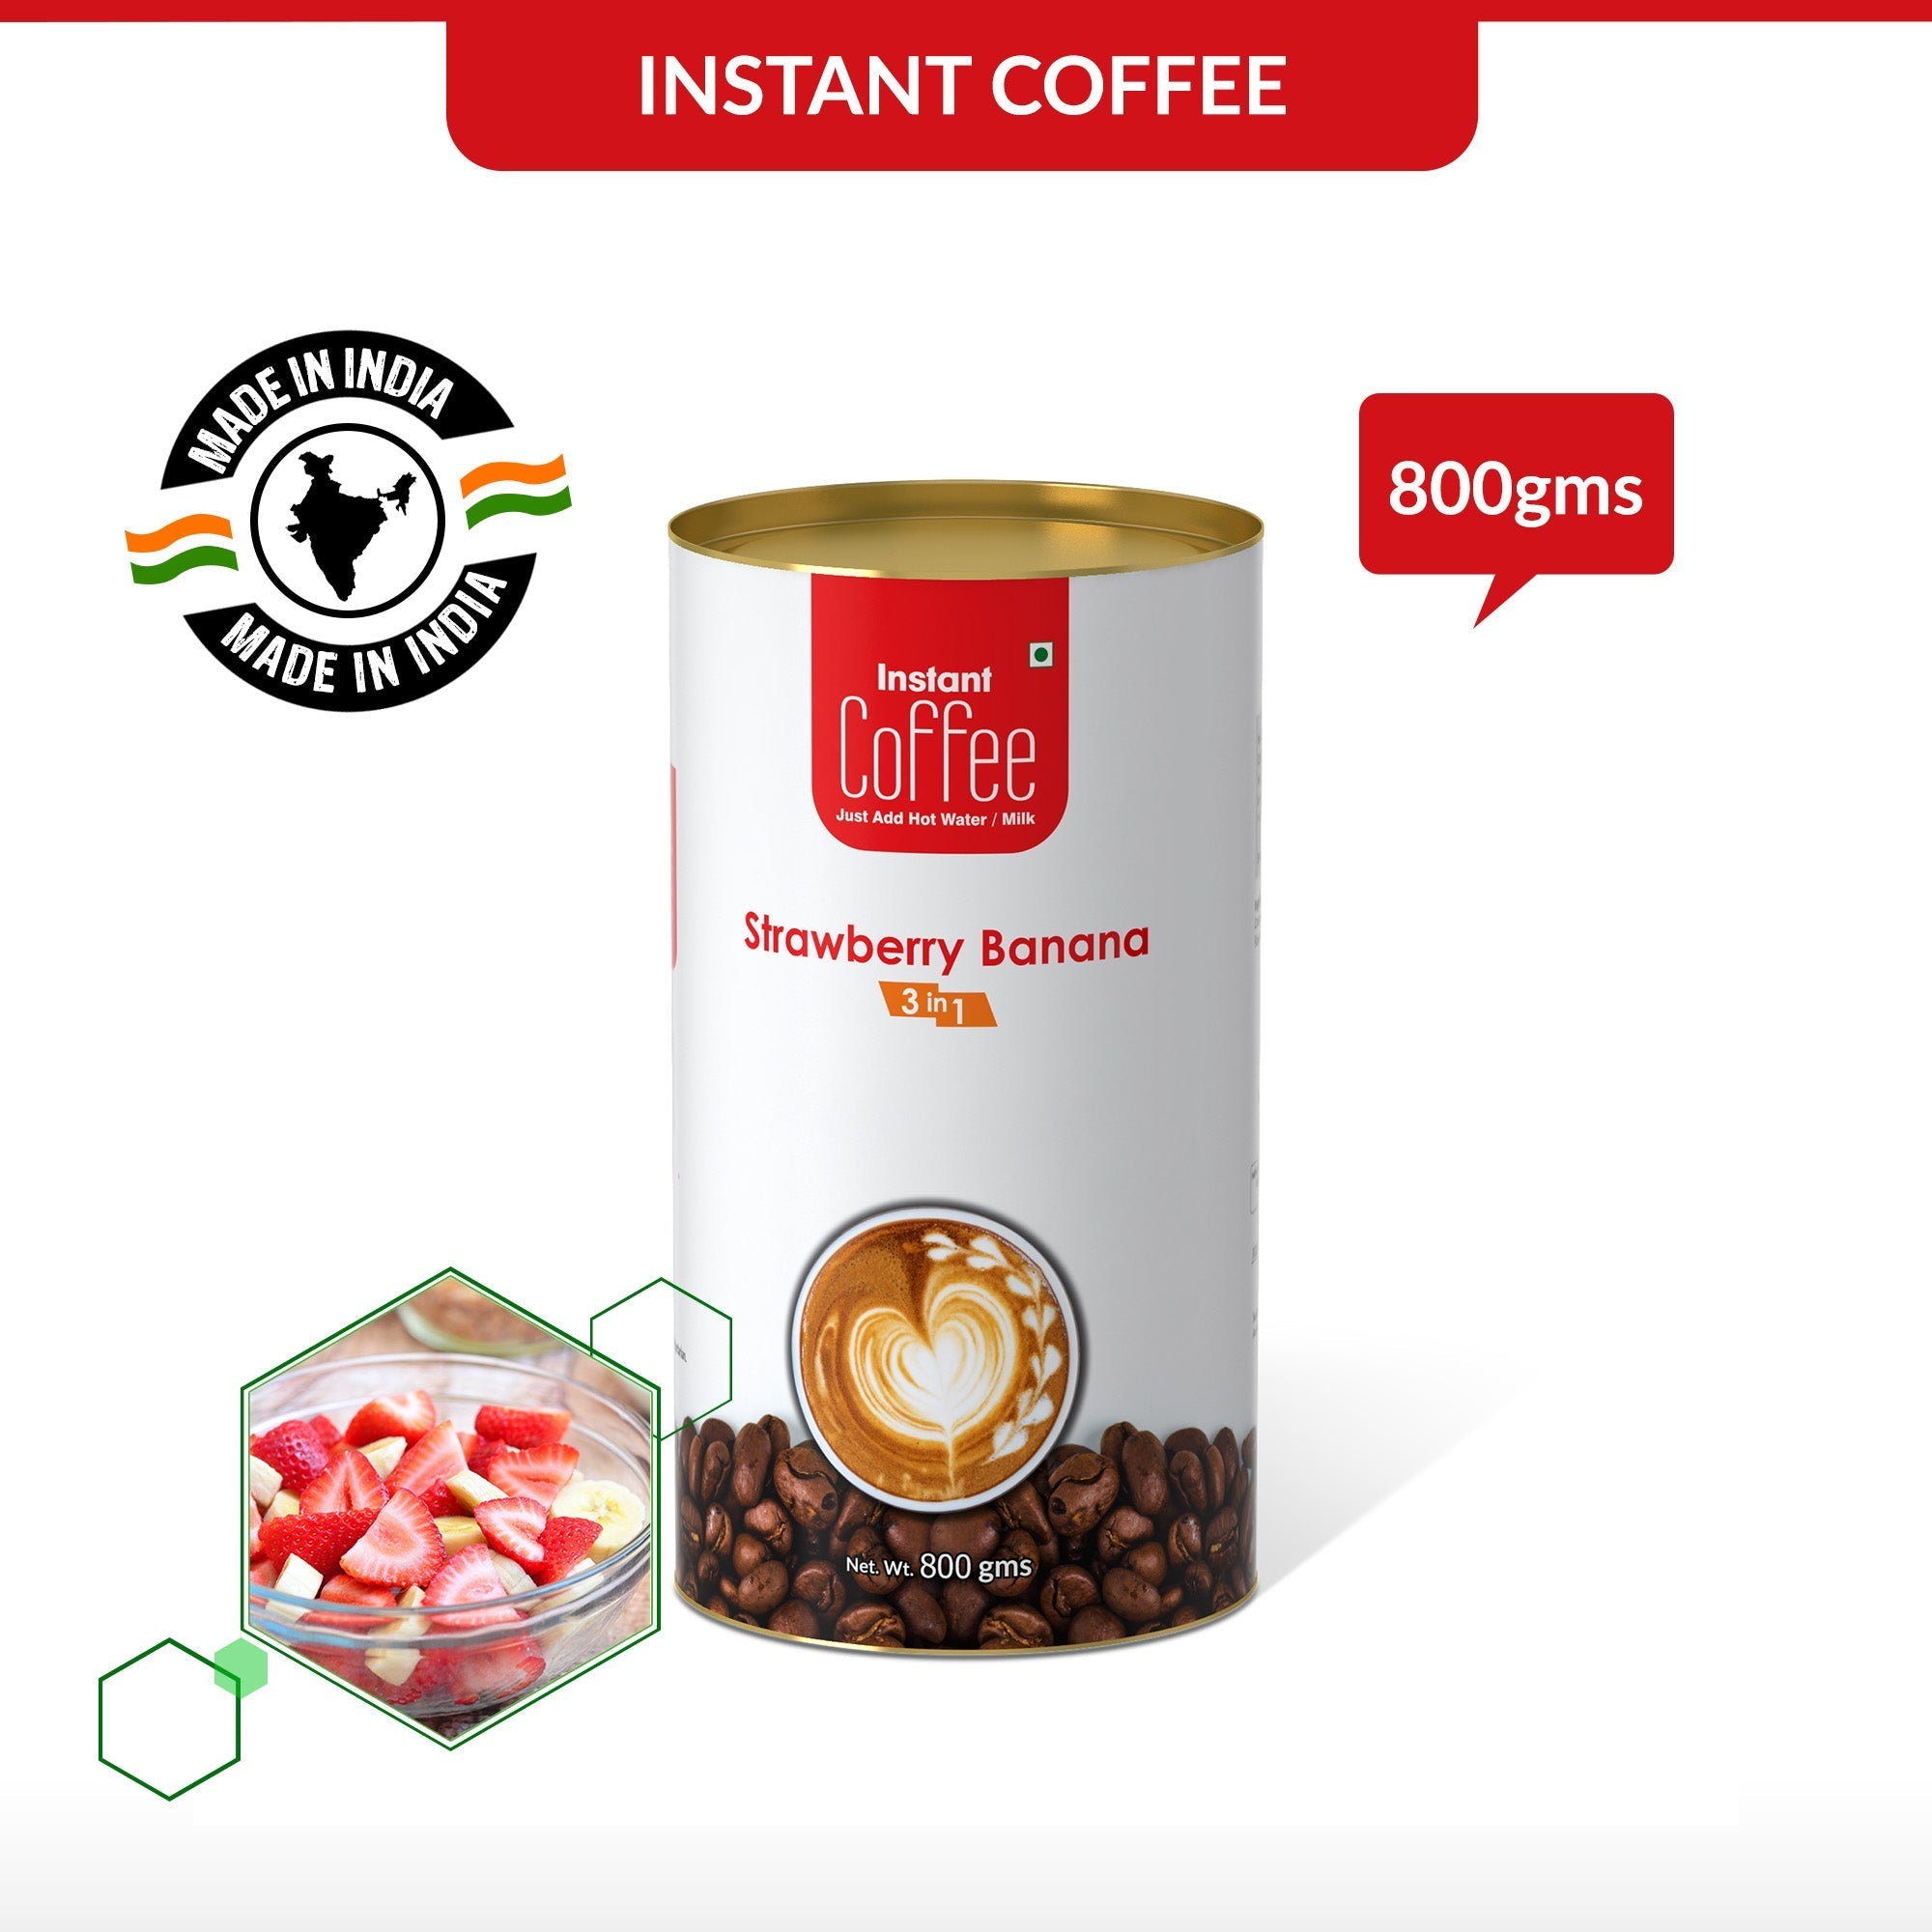 Strawberry Banana Instant Coffee Premix (3 in 1) - 800 gms